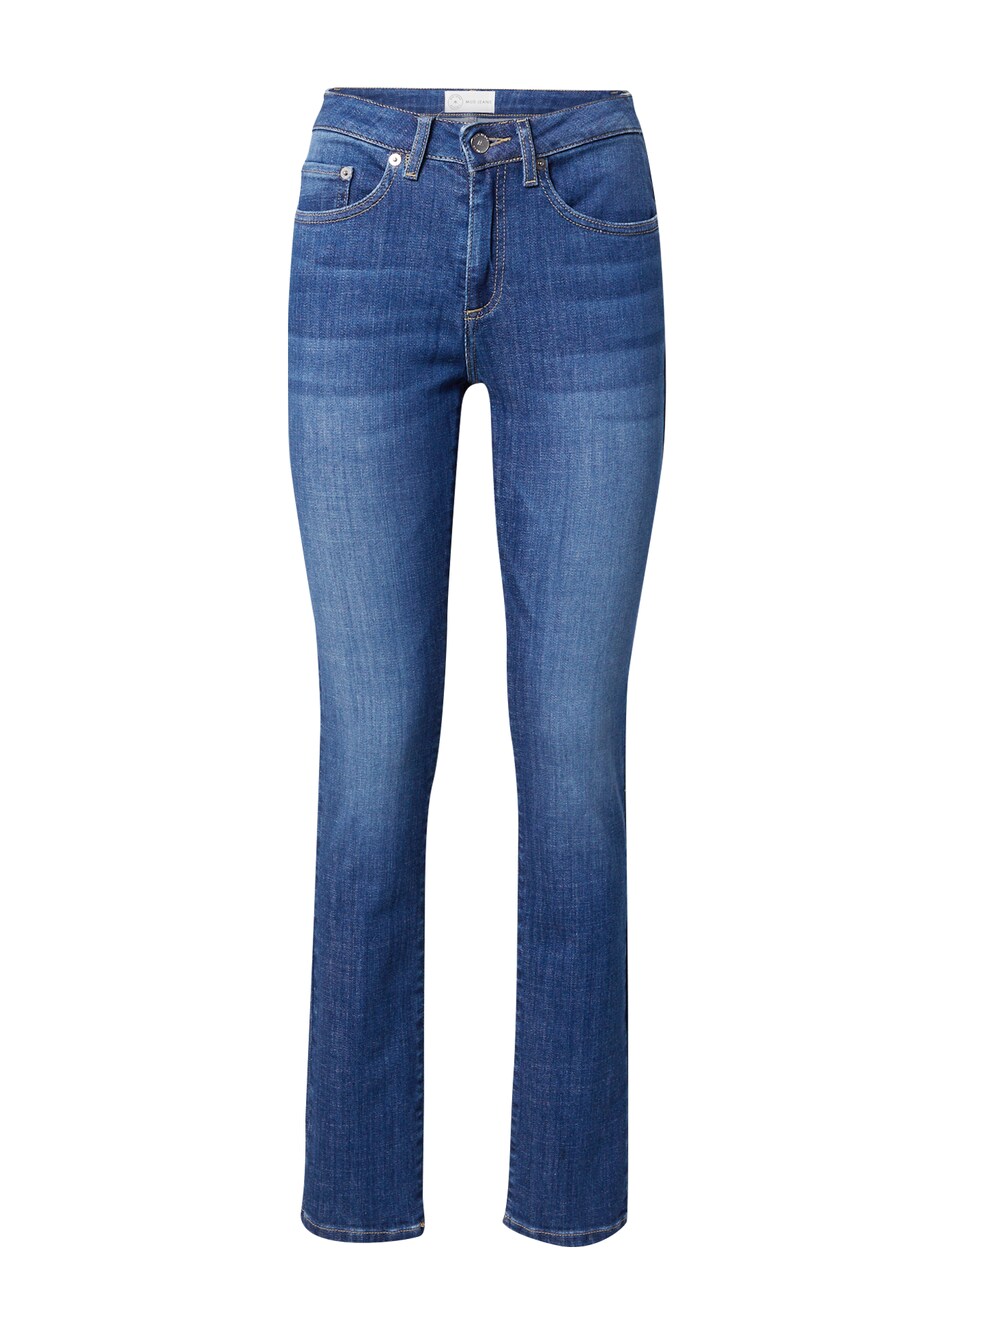 Обычные джинсы Mud Jeans Faye Straight, синий